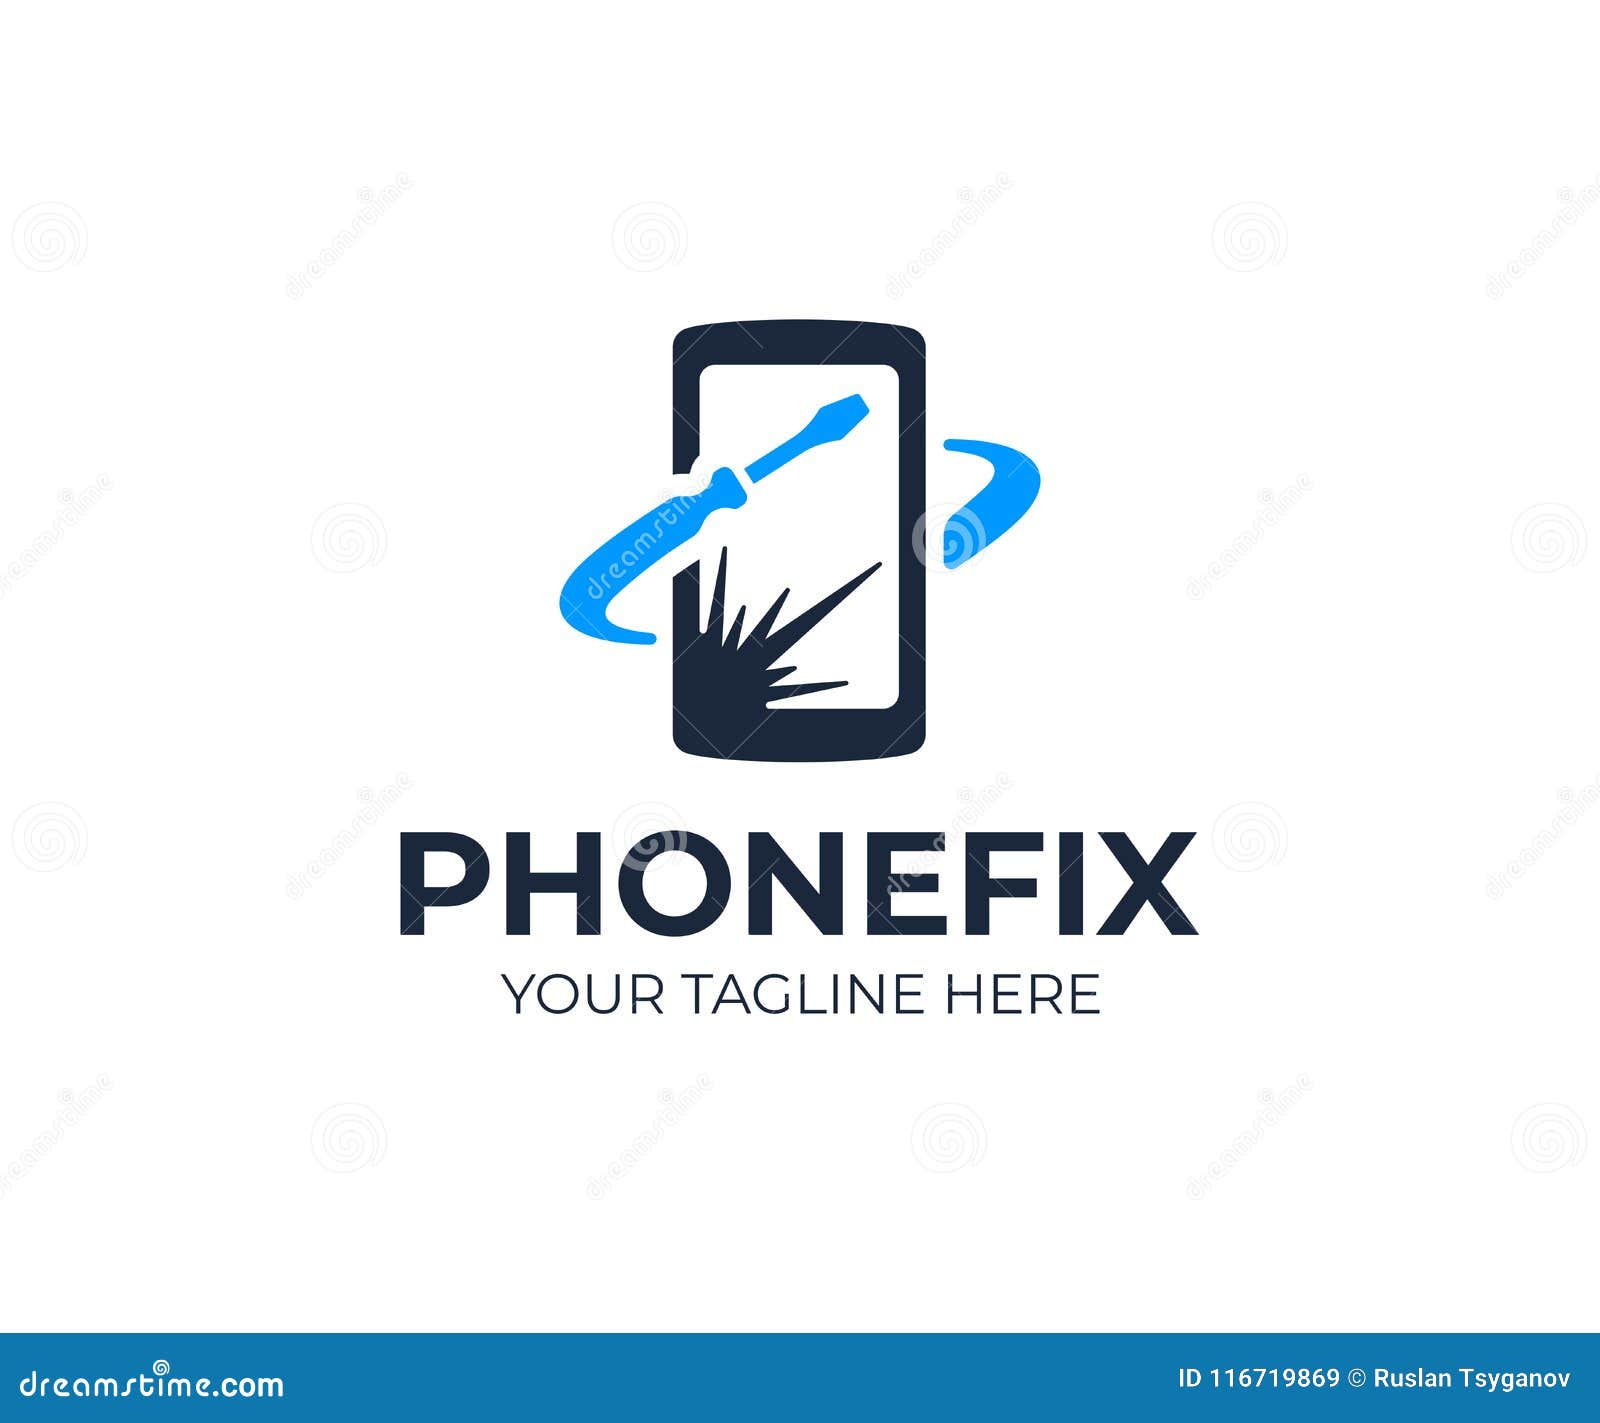 cell phone logo design